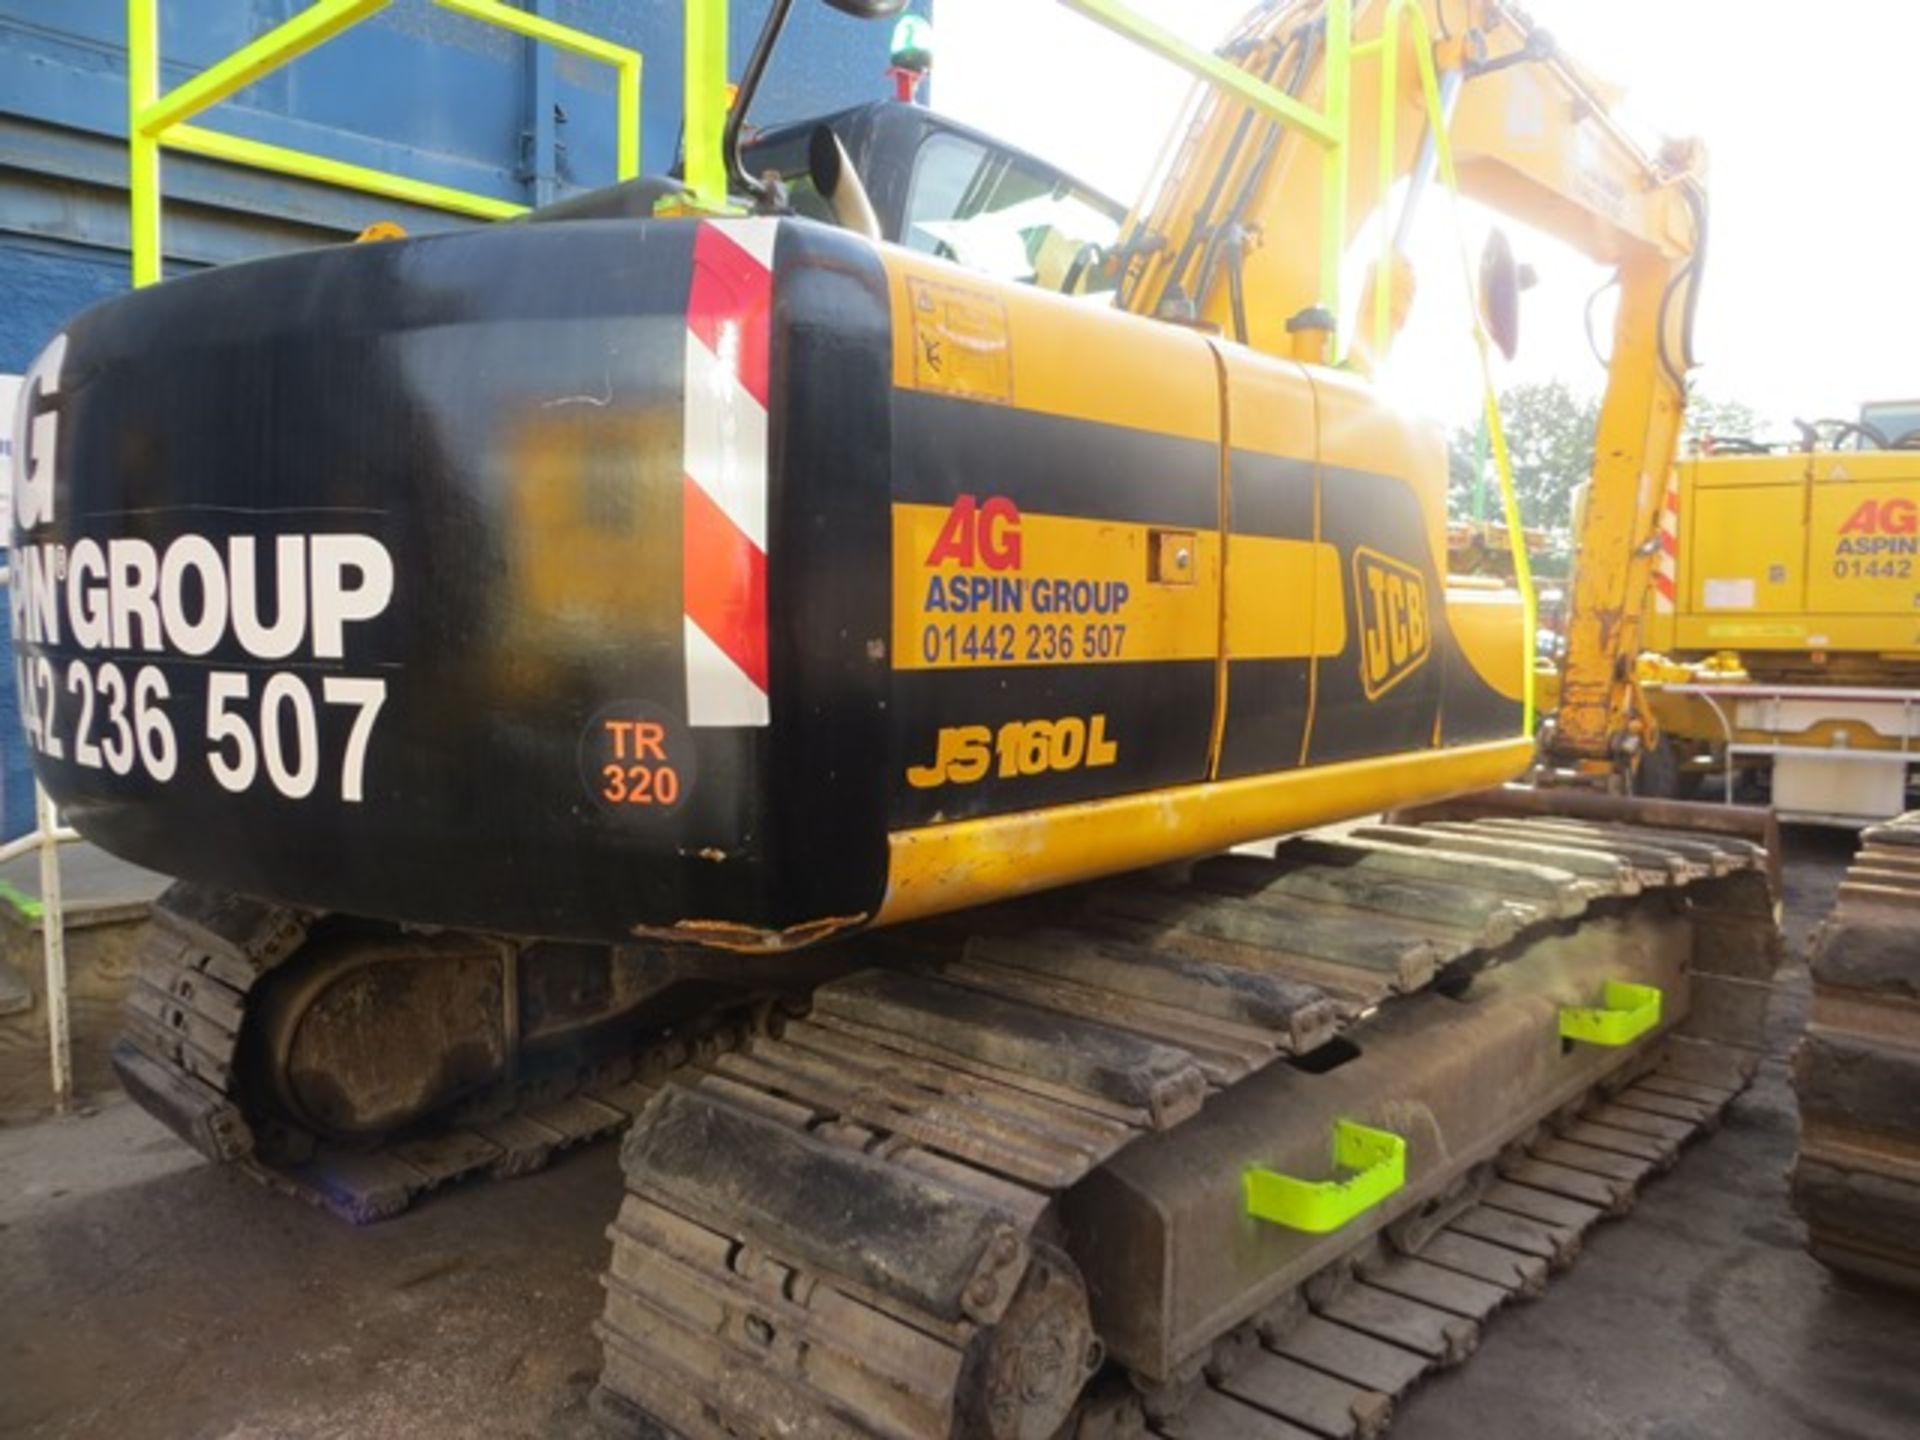 JCB JS160 crawler excavator, VIN No. SLPJS1033EO703512, Local Number TR320, serial number unknown, - Image 8 of 13